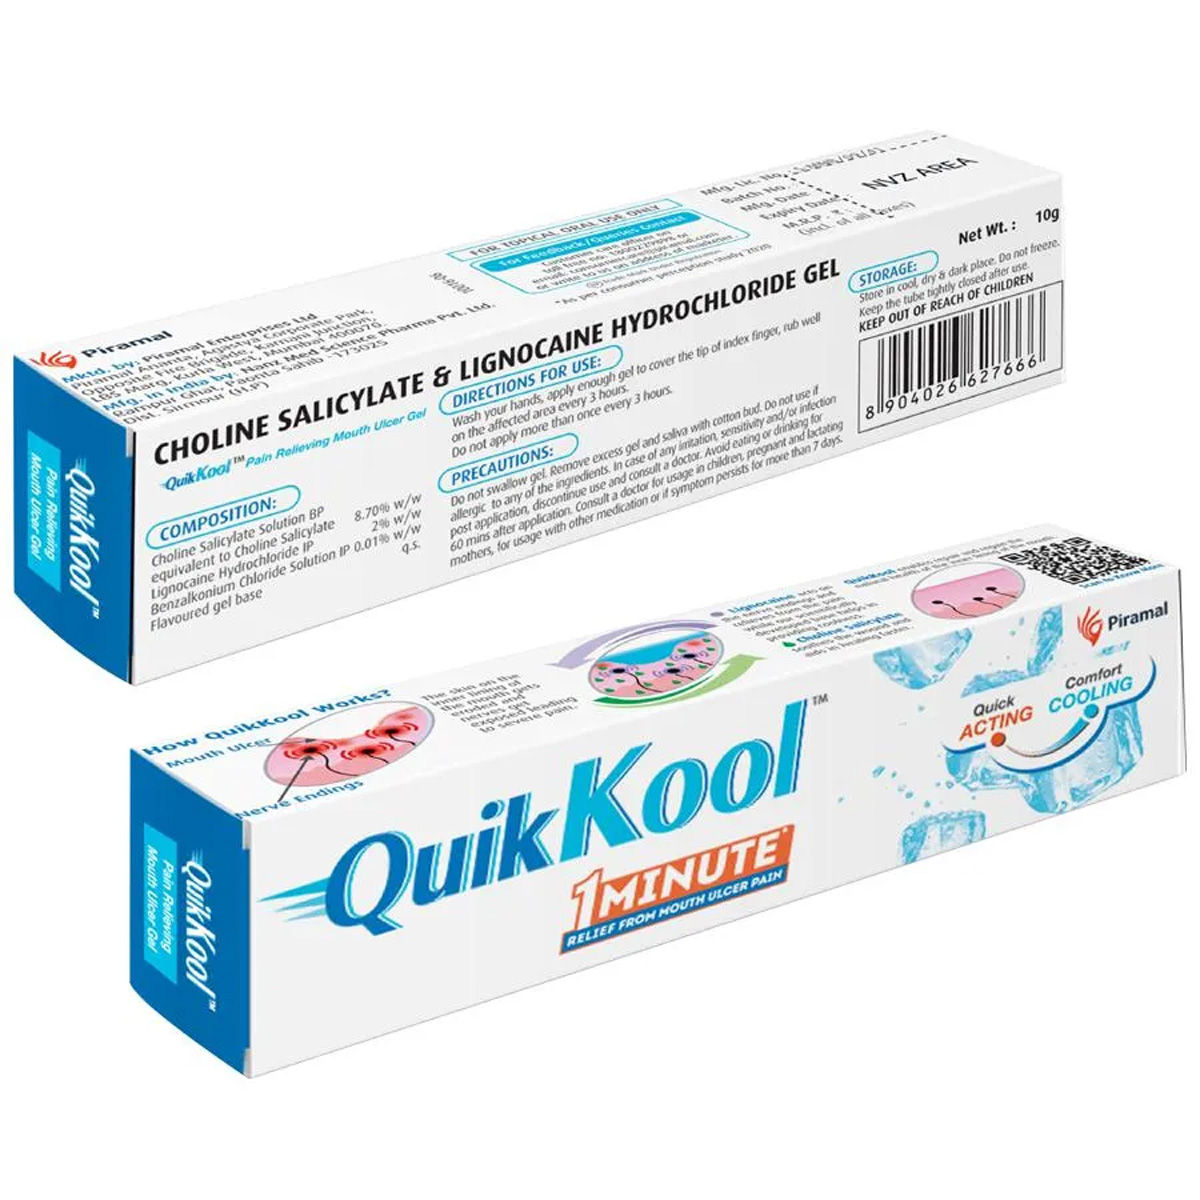 Quik Kool Mouth Ulcer Gel, 10 gm, Pack of 1 